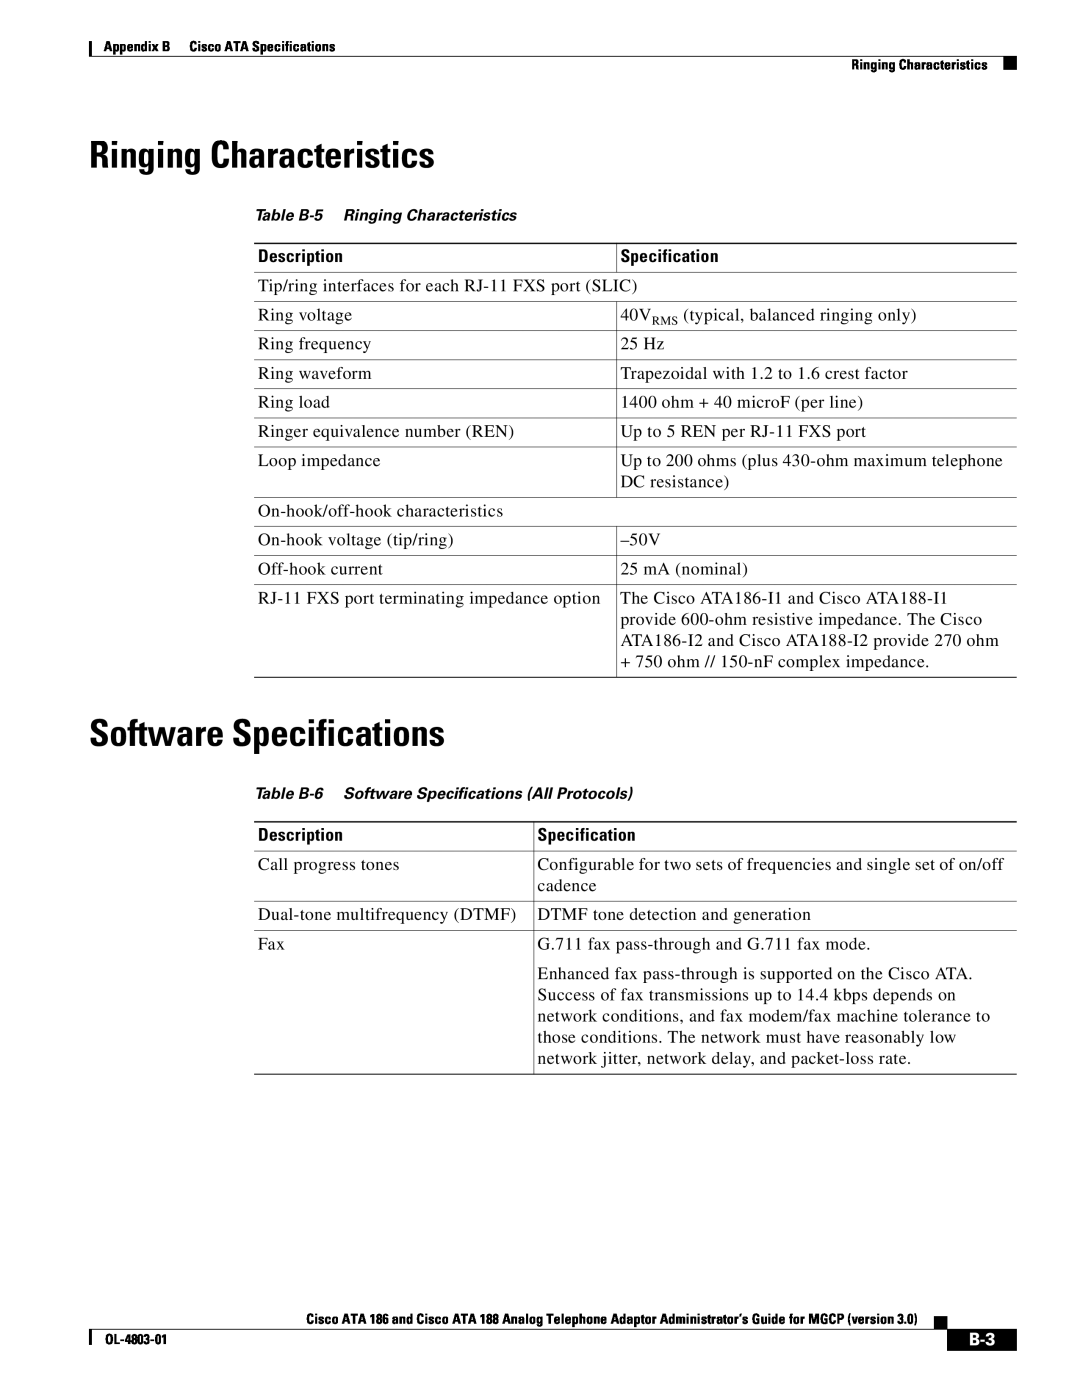 Cisco Systems ATA 188, ATA 186 manual Ringing Characteristics, Software Specifications, Description 